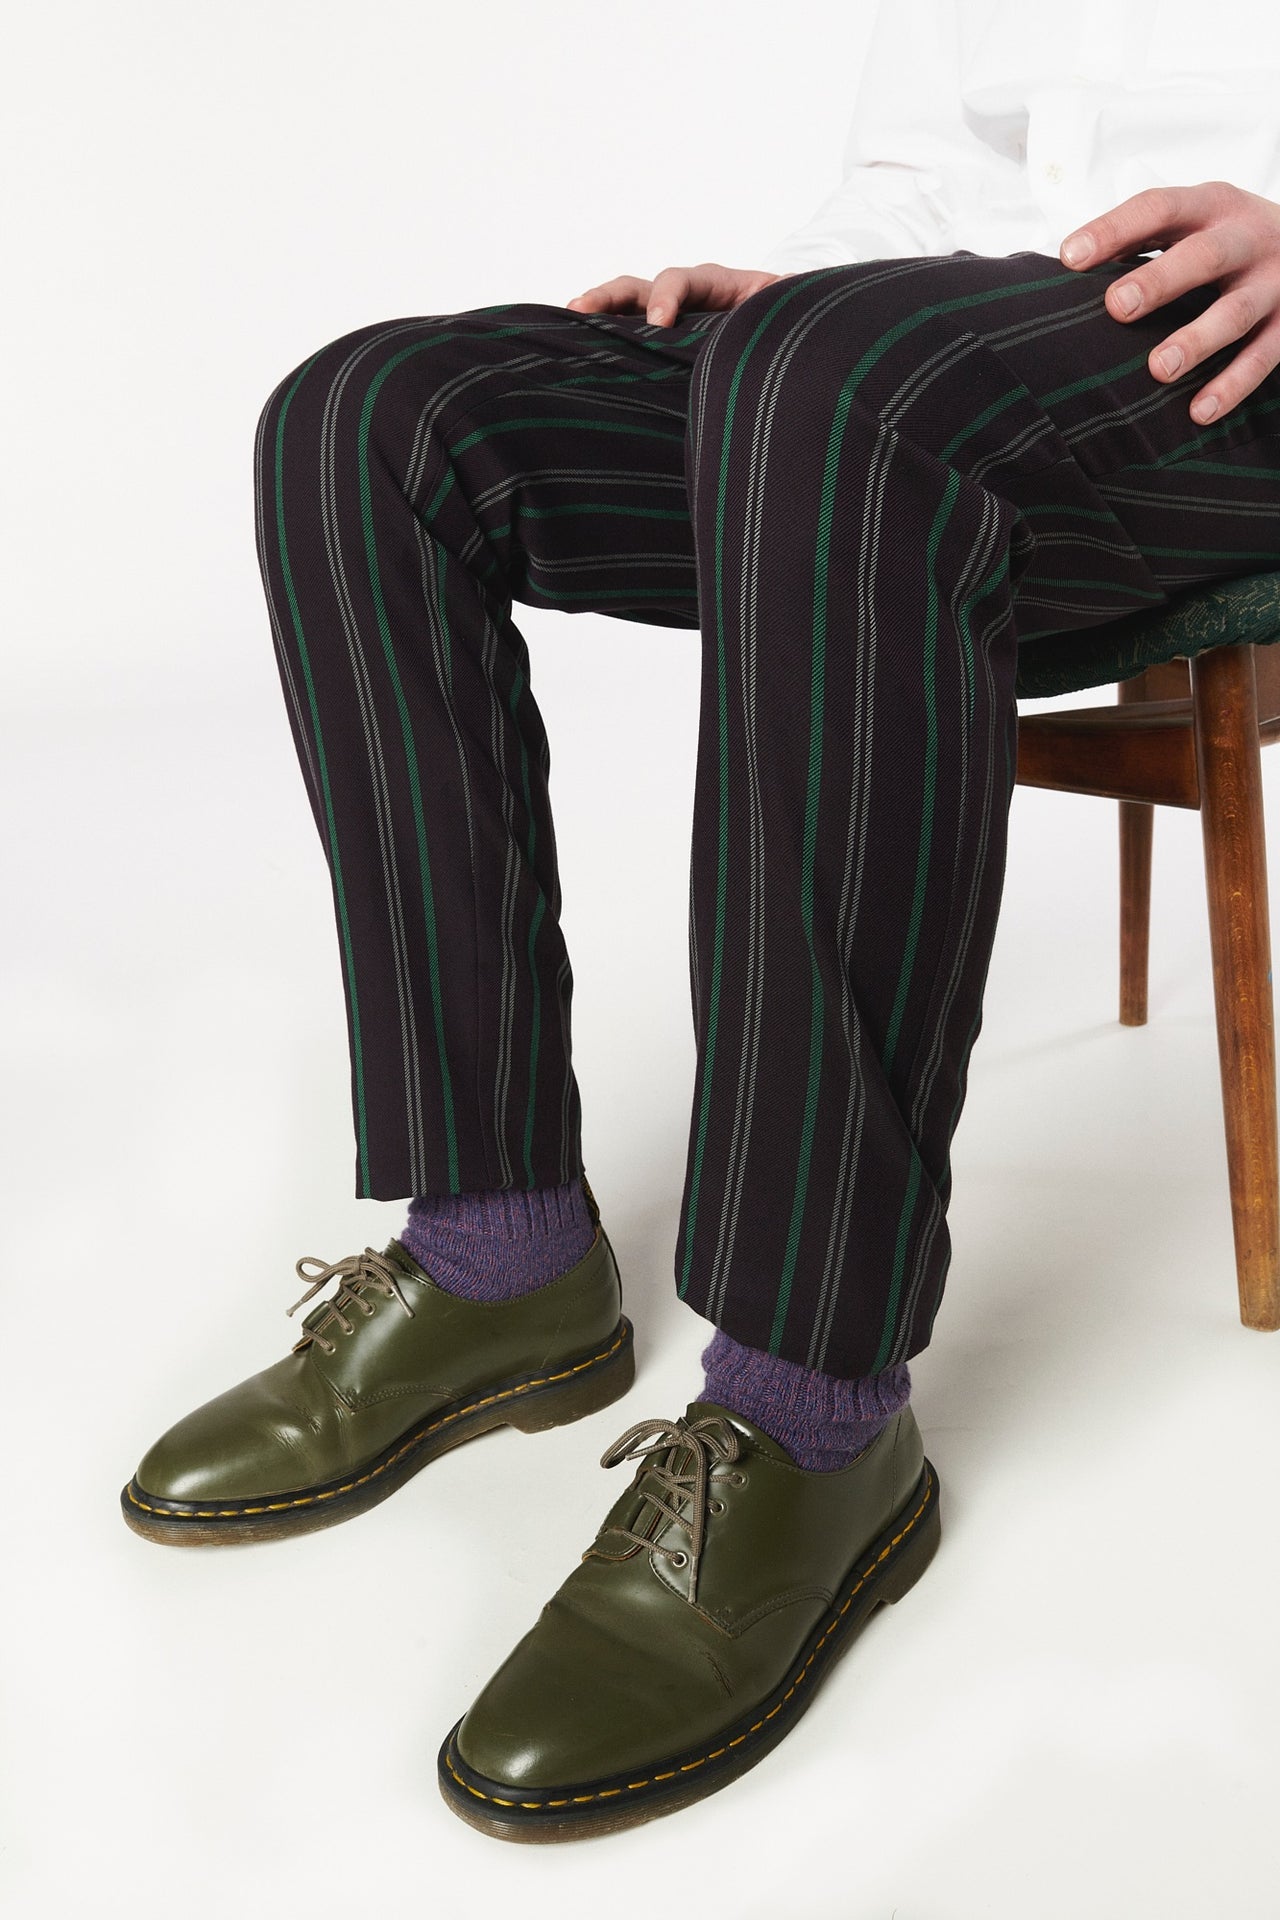 Bohemian Trousers in a Purple and Emerald Green Stripe in a Fine Italian Cotton